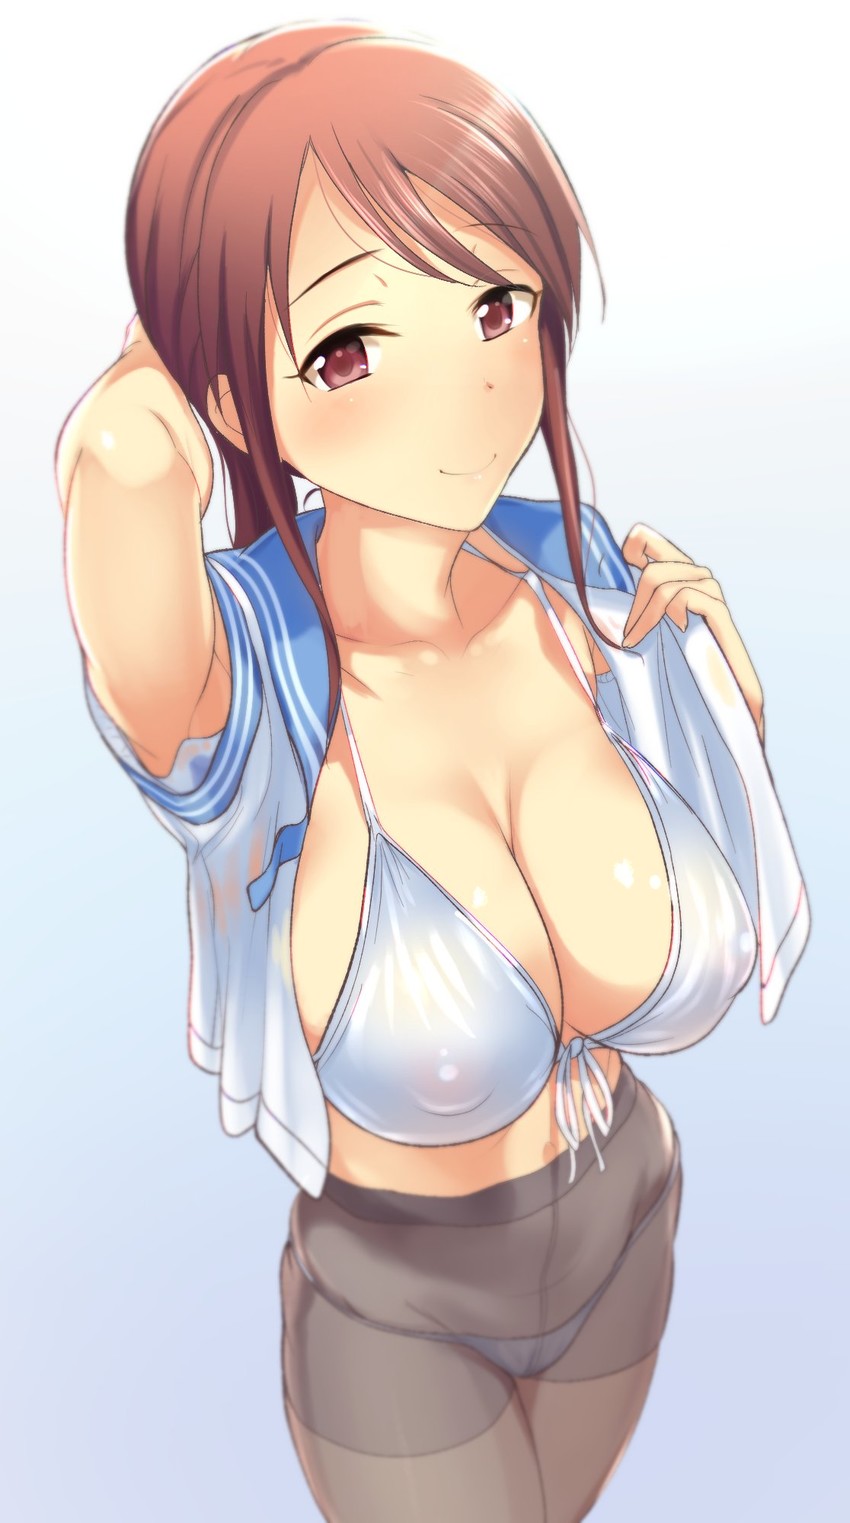 Anime Girls With Big Boobs Wet Shirt